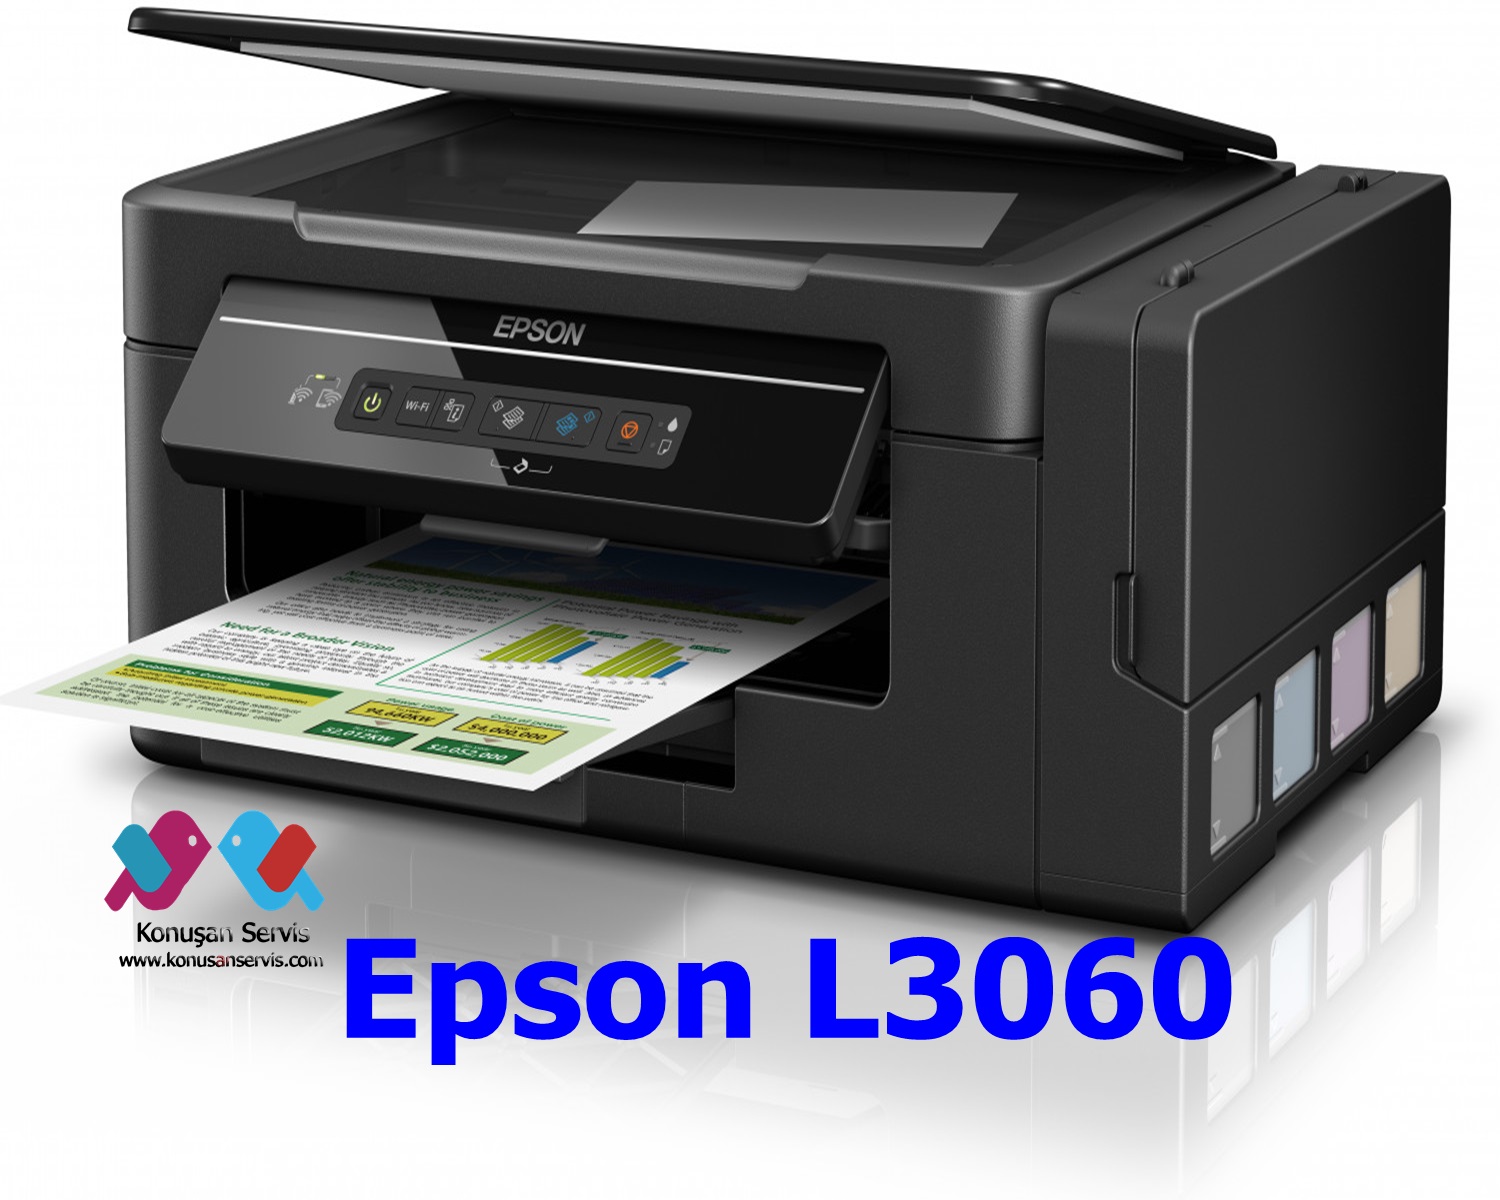 Epson EcoTank ITS L3060 driver Win 7 64 Bit Full indir